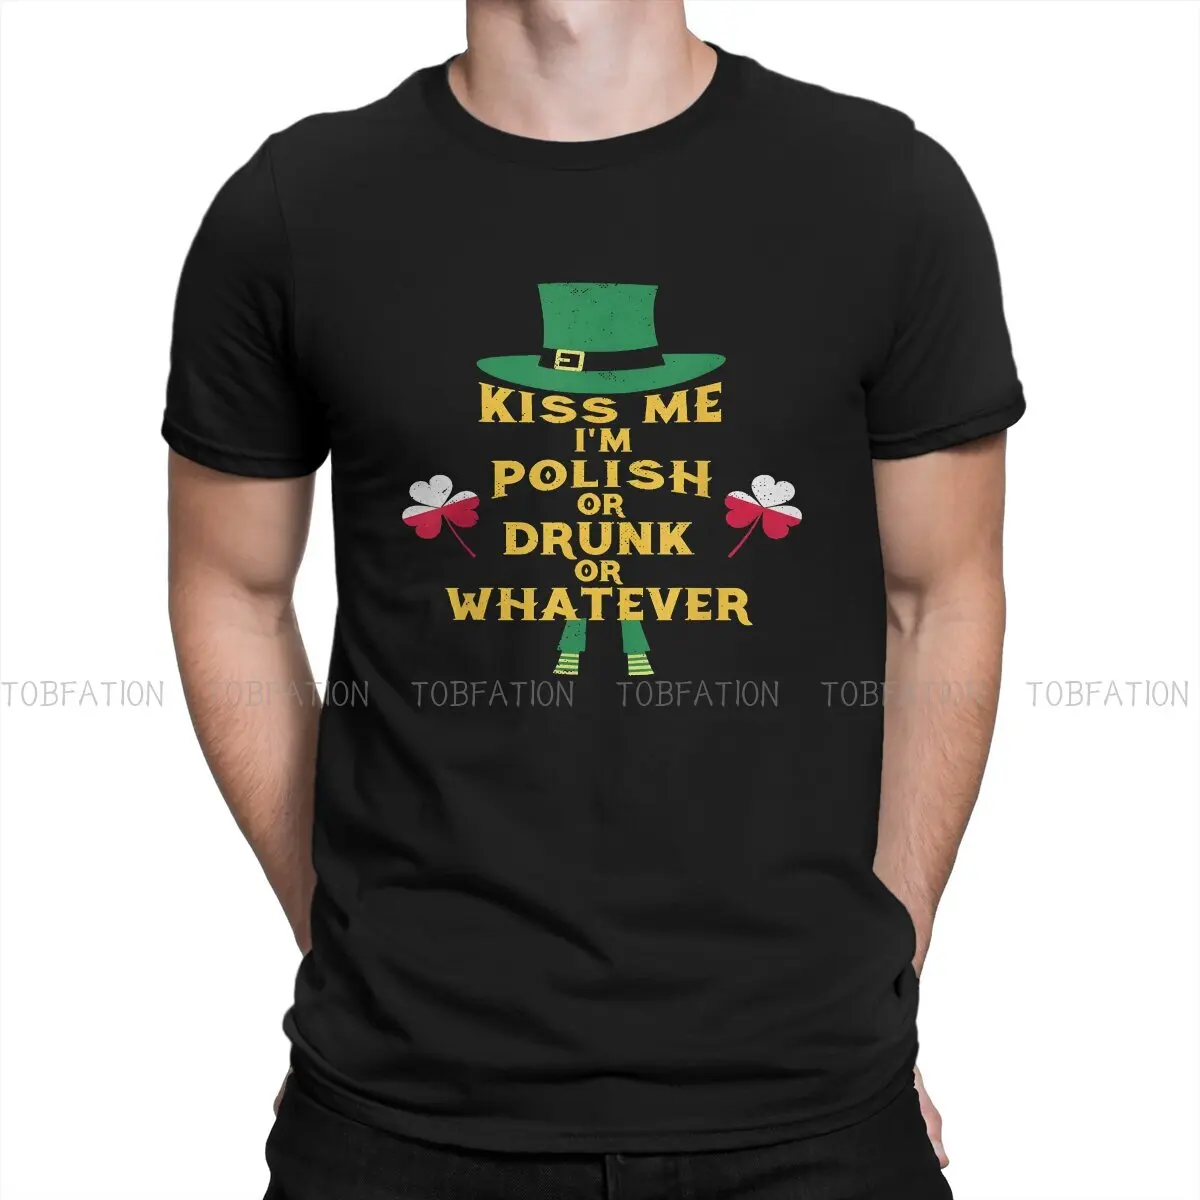 

Kiss Me I'm Polish Hip Hop TShirt St. Patrick's Day Irish Shamrock Style Tops Casual T Shirt Men Tee Special Gift Clothes